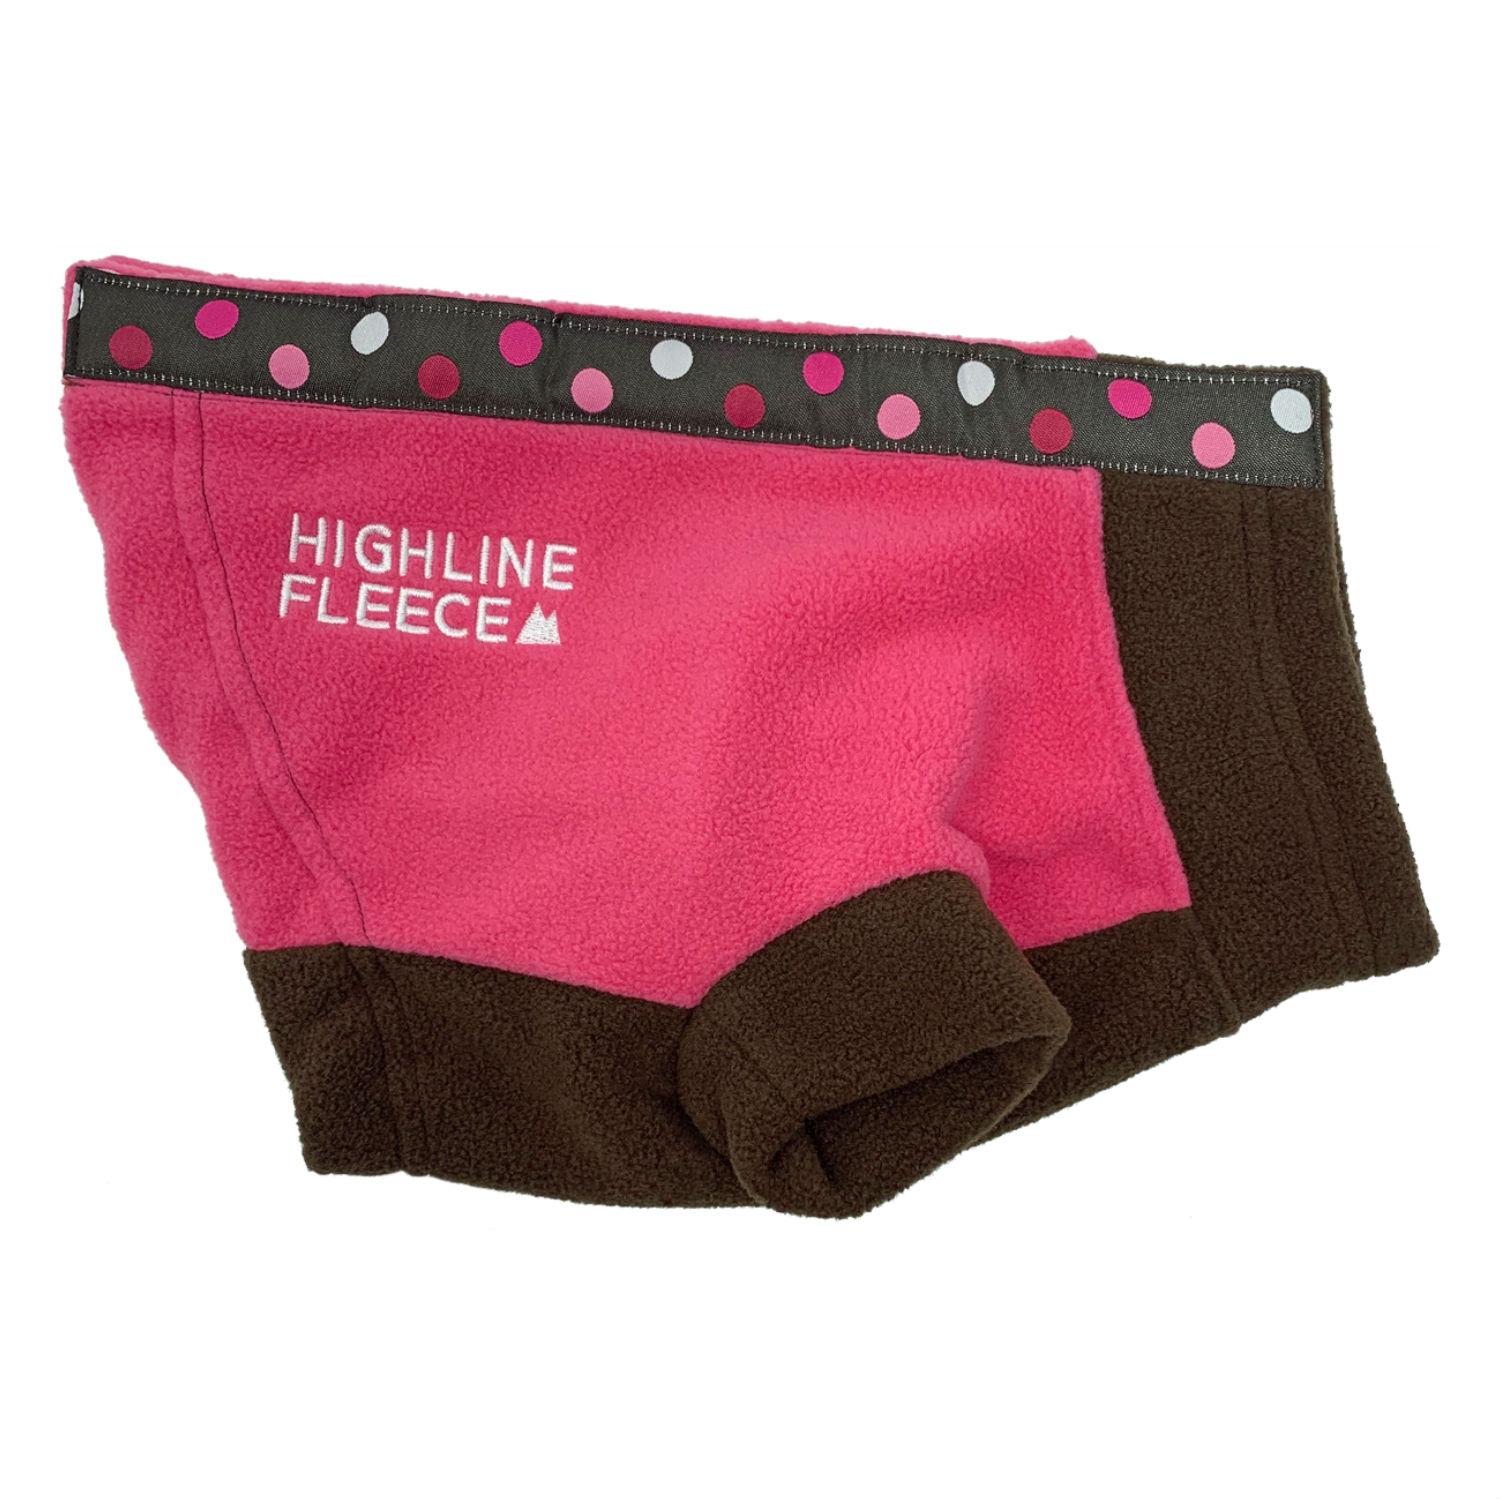 Highline Fleece Dog Coat by Doggie Design - Pink and Brown Polka Dots